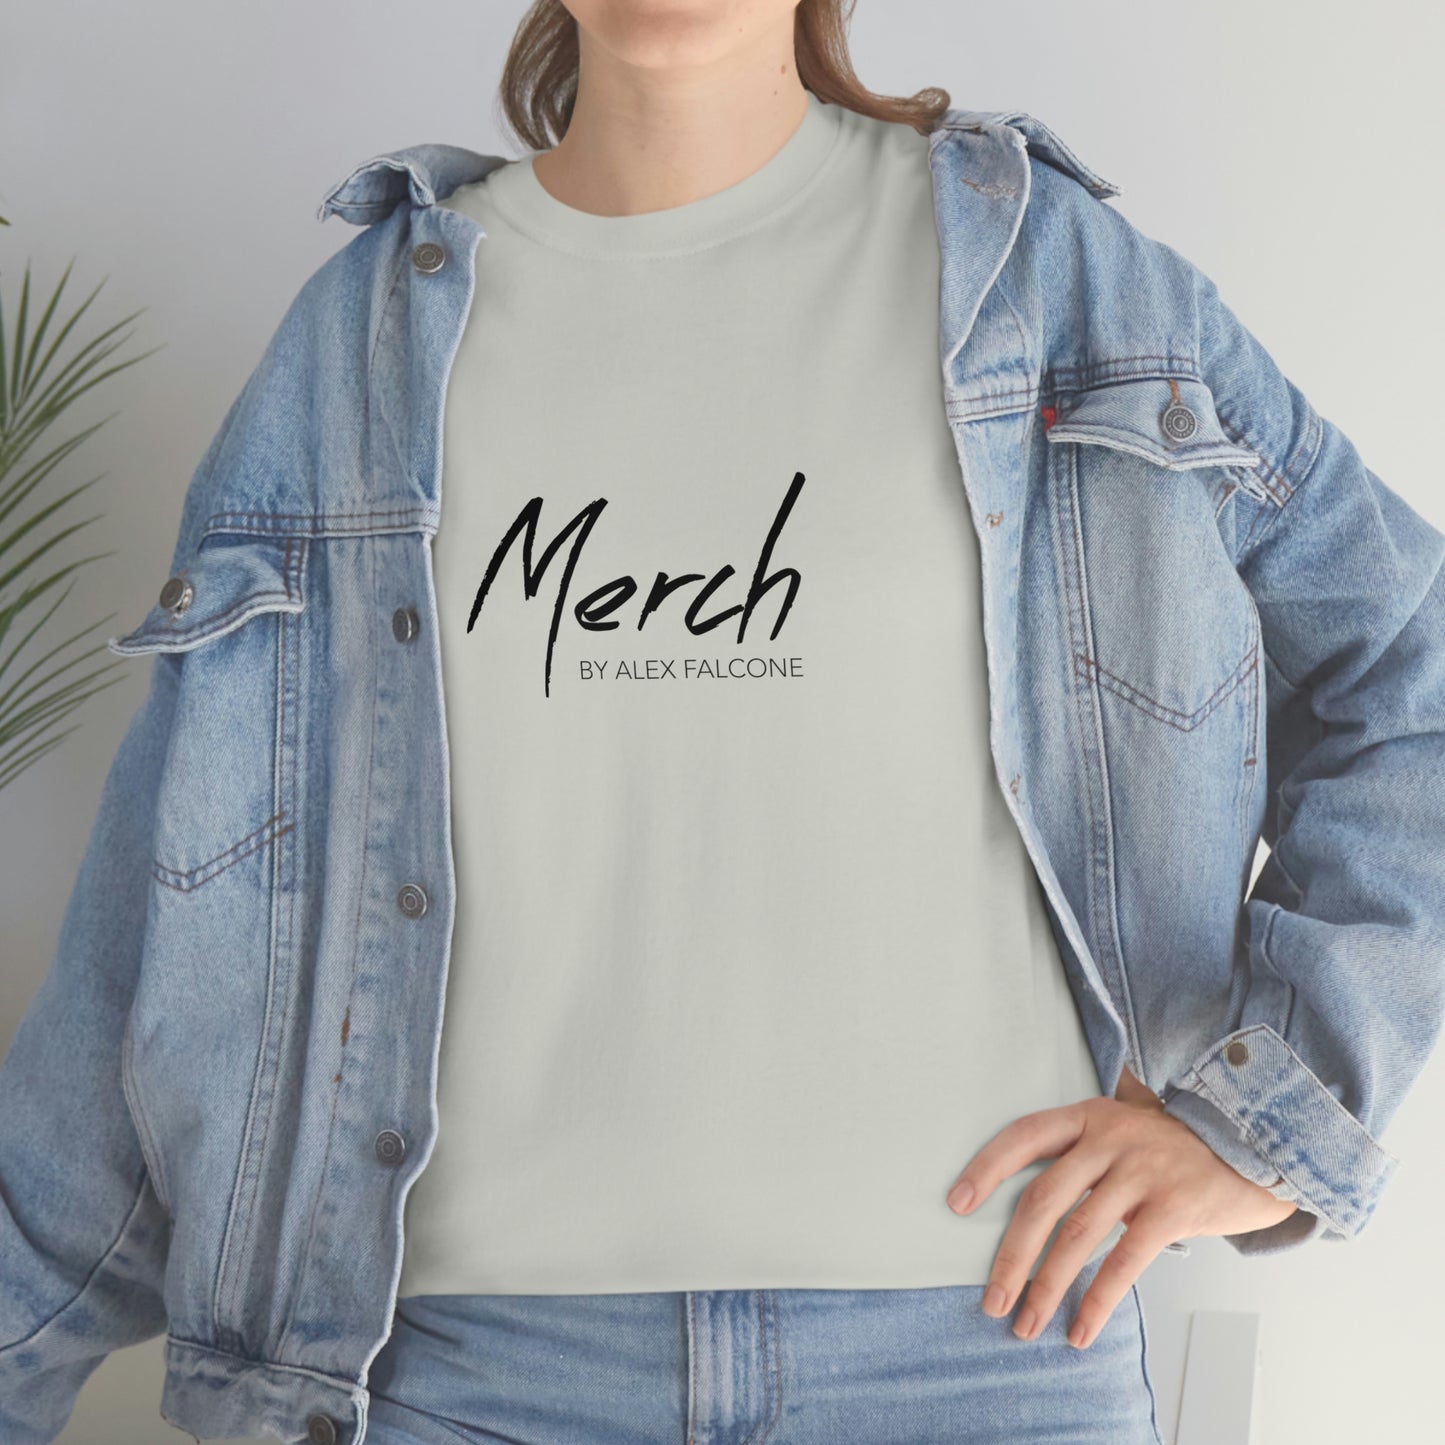 Merch by Alex Falcone - t-shirt